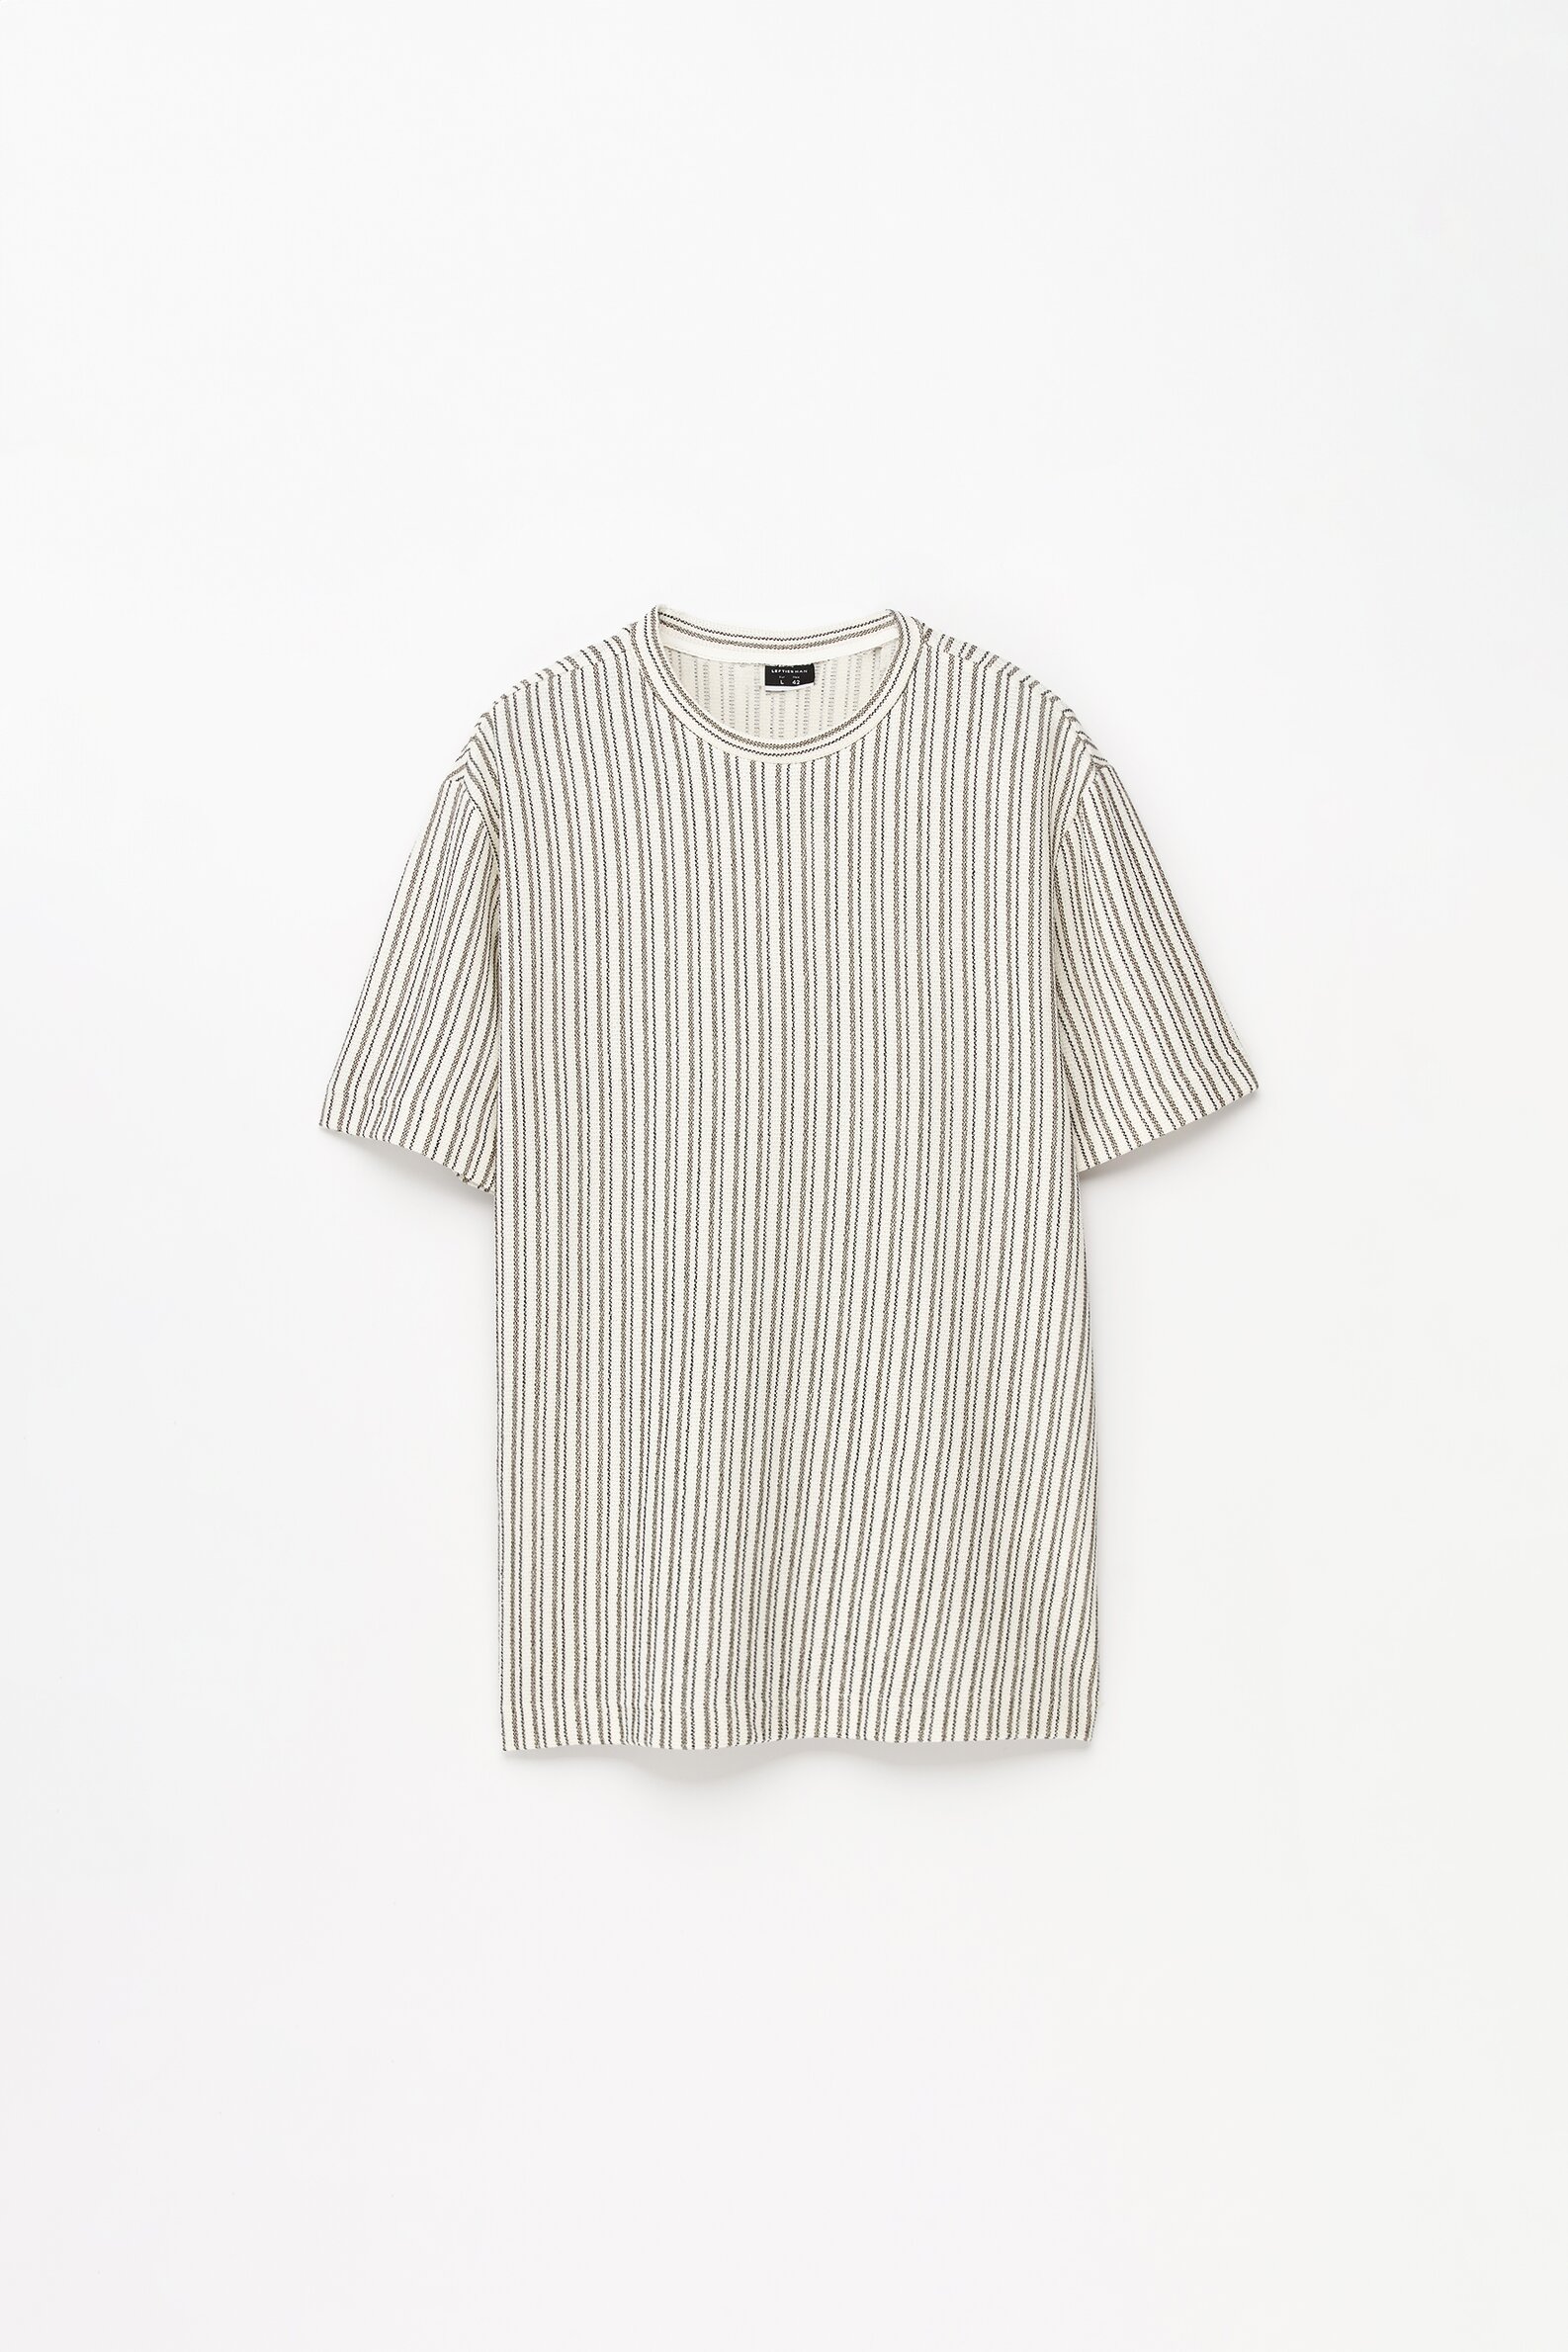 Striped rustic halter top - Short Sleeve T-shirts - T-shirts